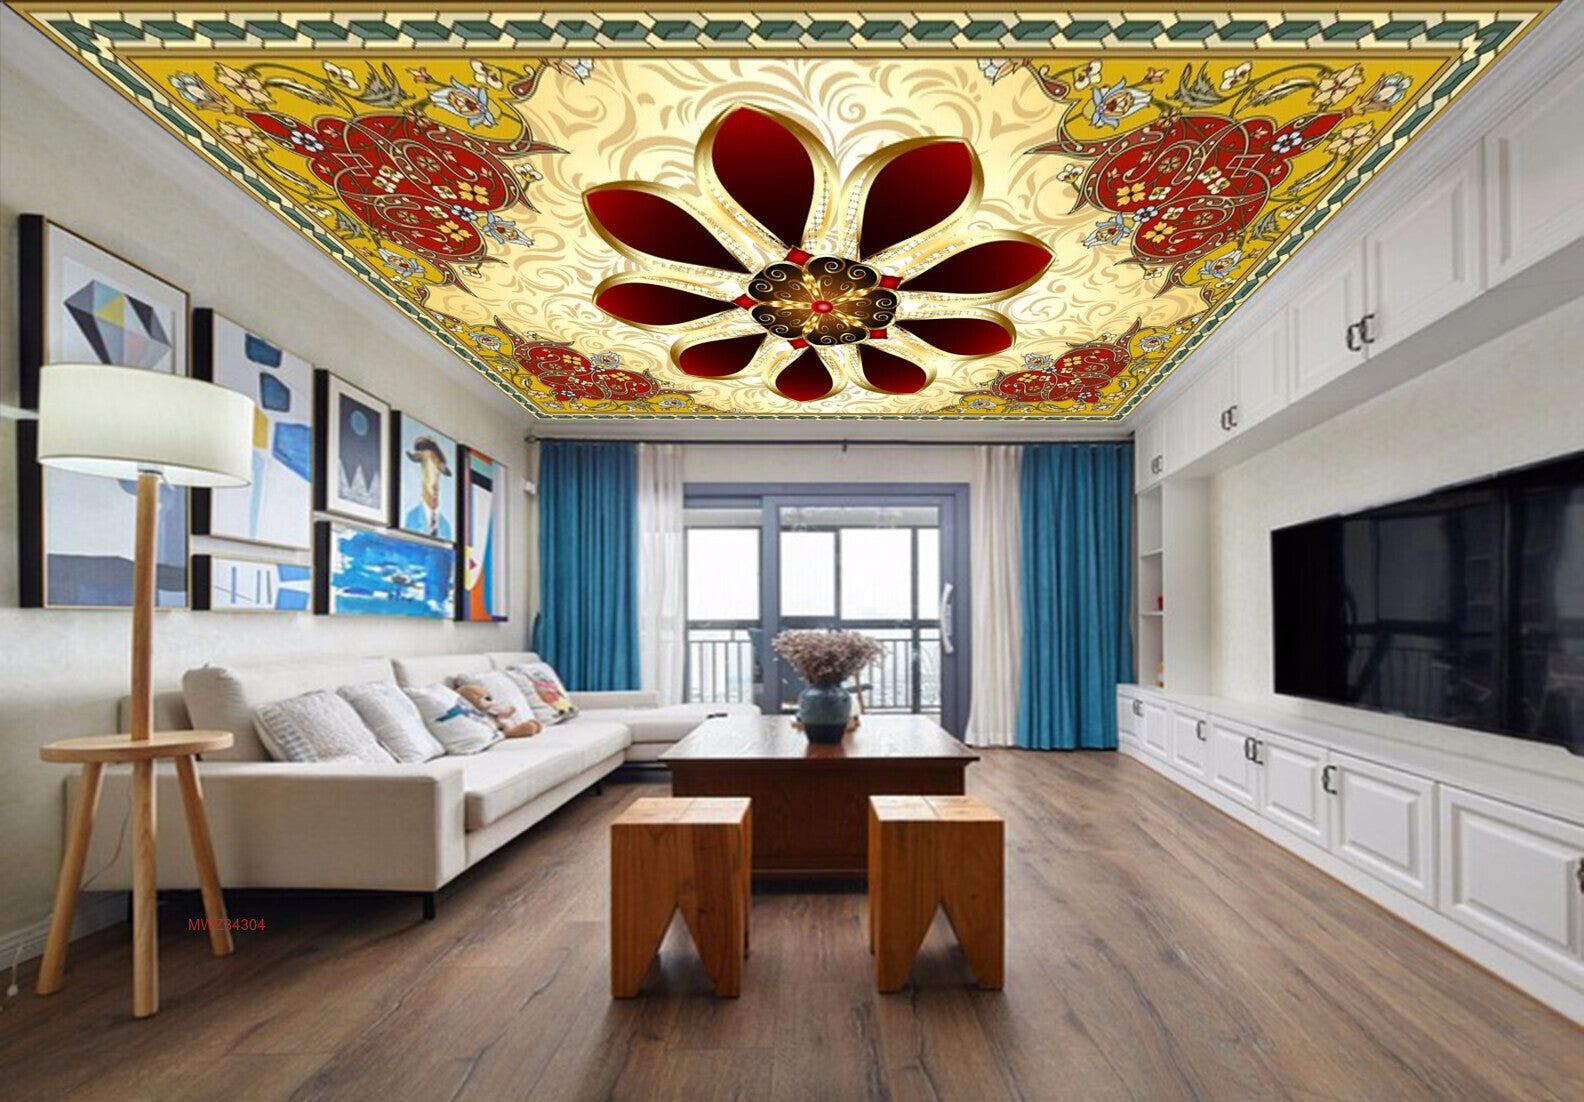 Avikalp MWZ3430 Red Cream Flowers Designs HD Wallpaper for Ceiling